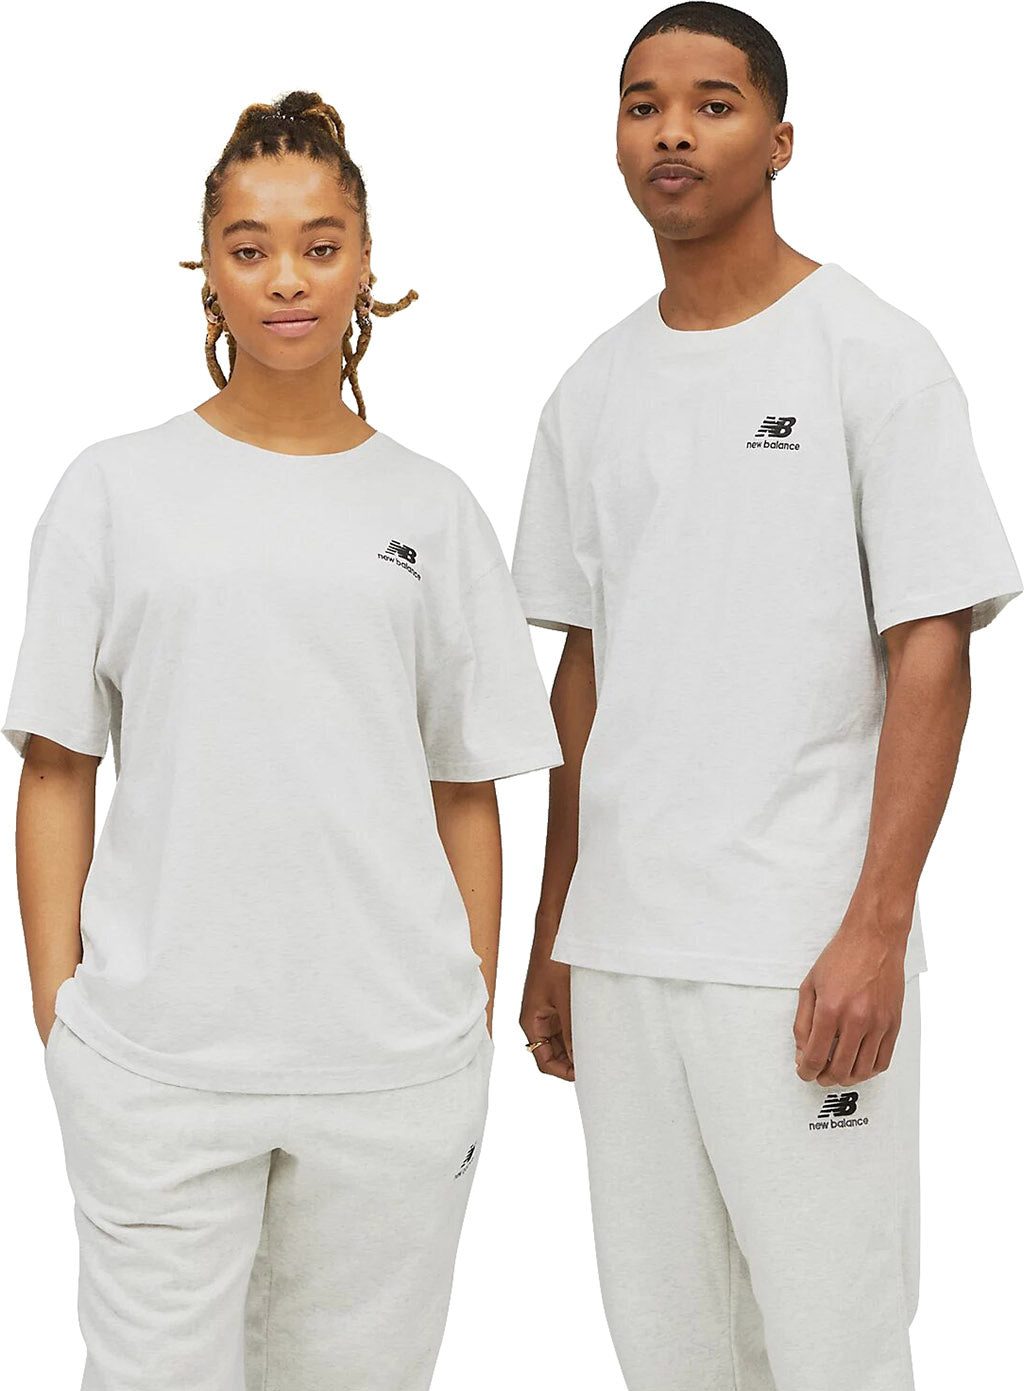 Uni-ssentials Cotton T-Shirt - New Balance